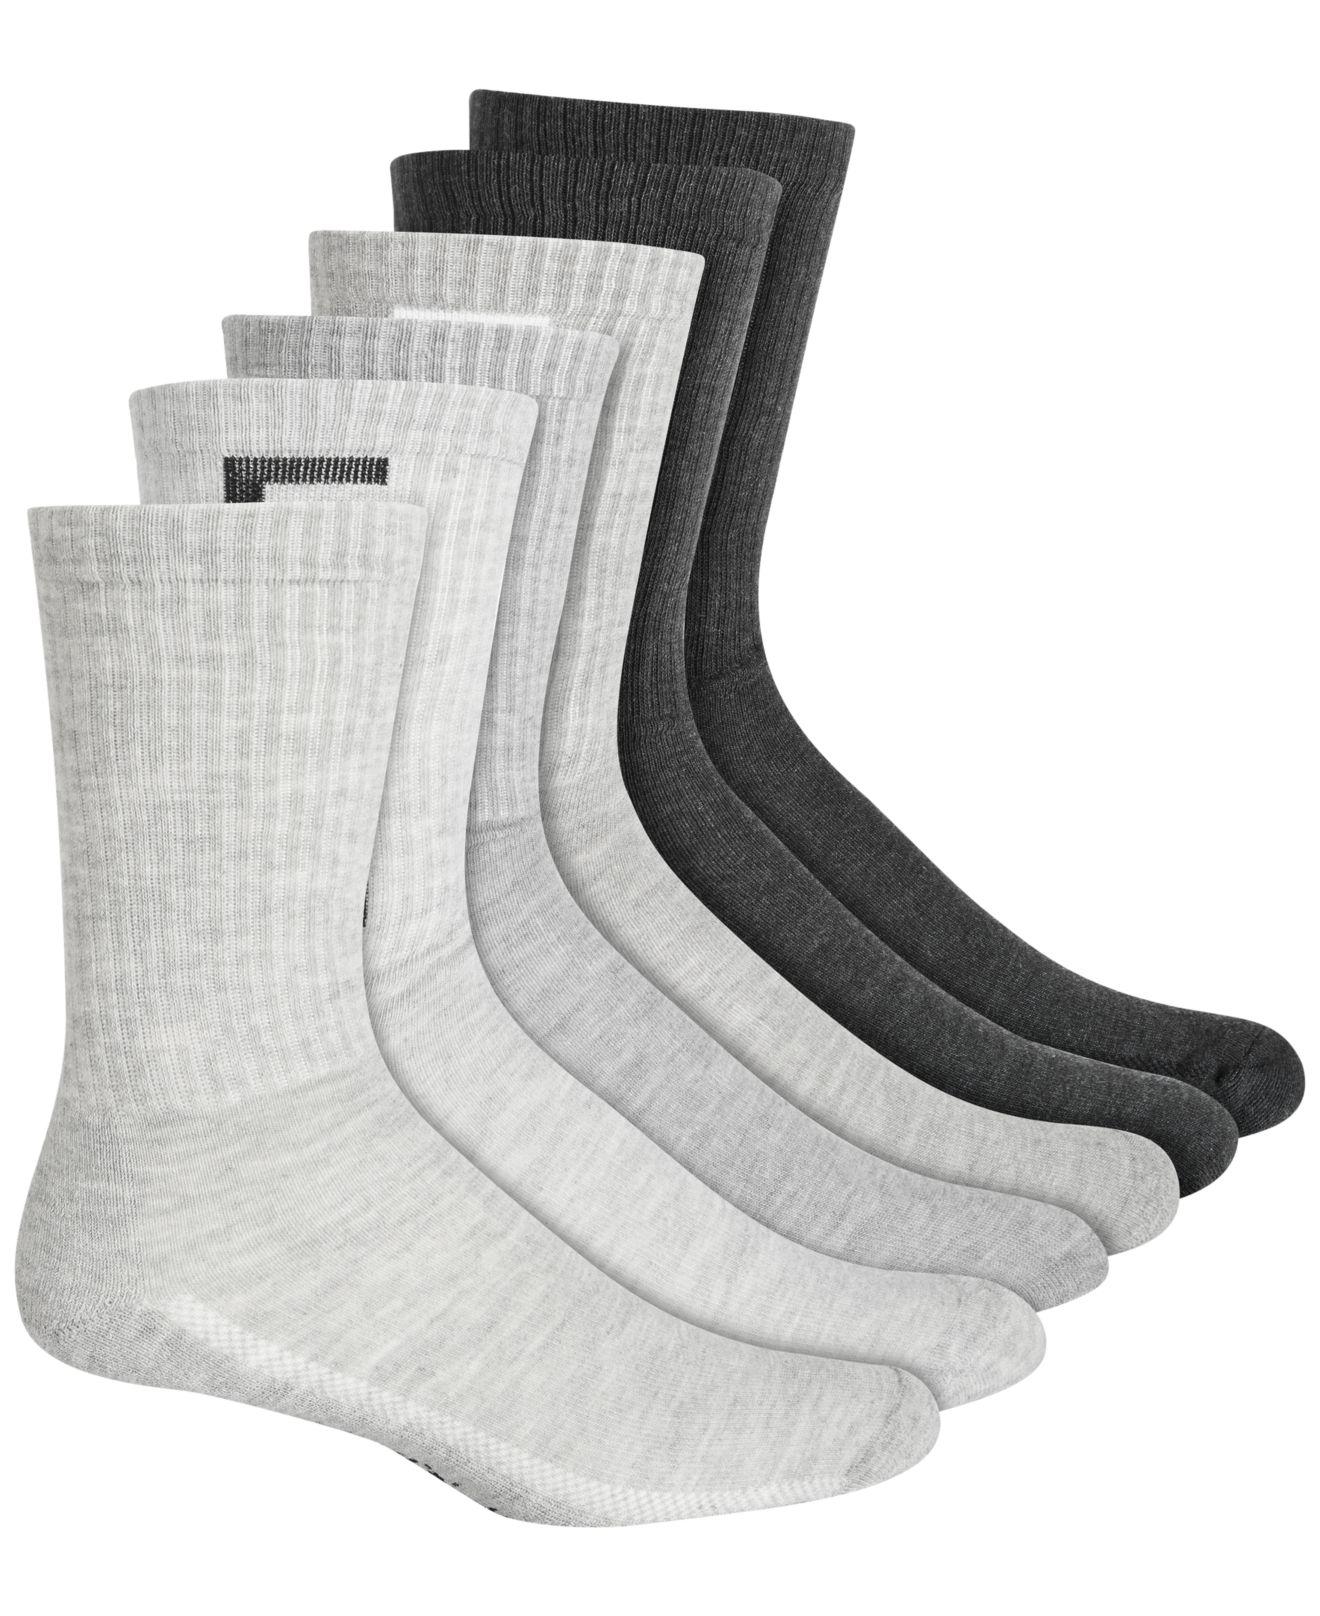 levis 120ca socks